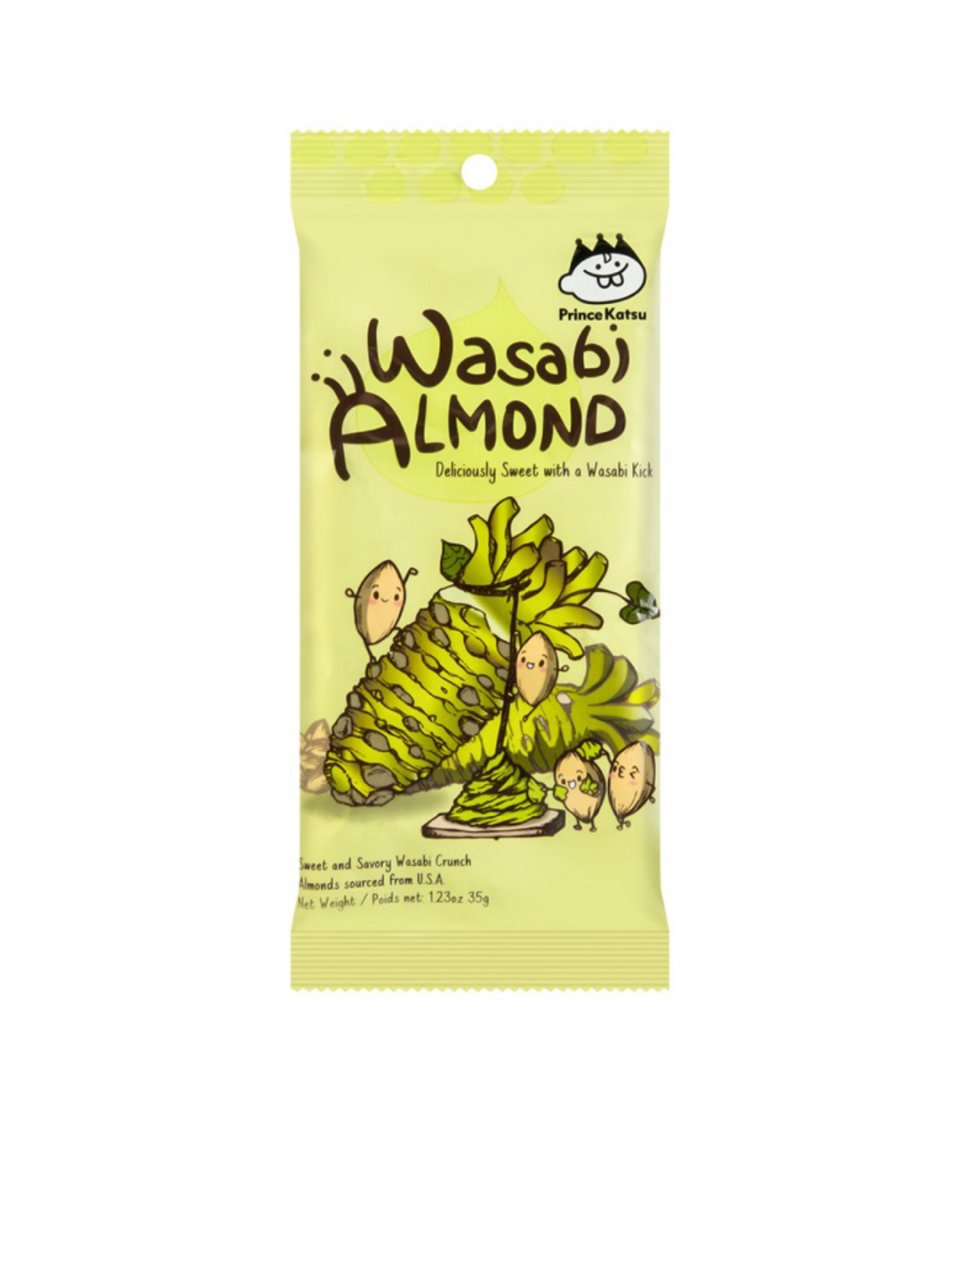 Wasabi almond